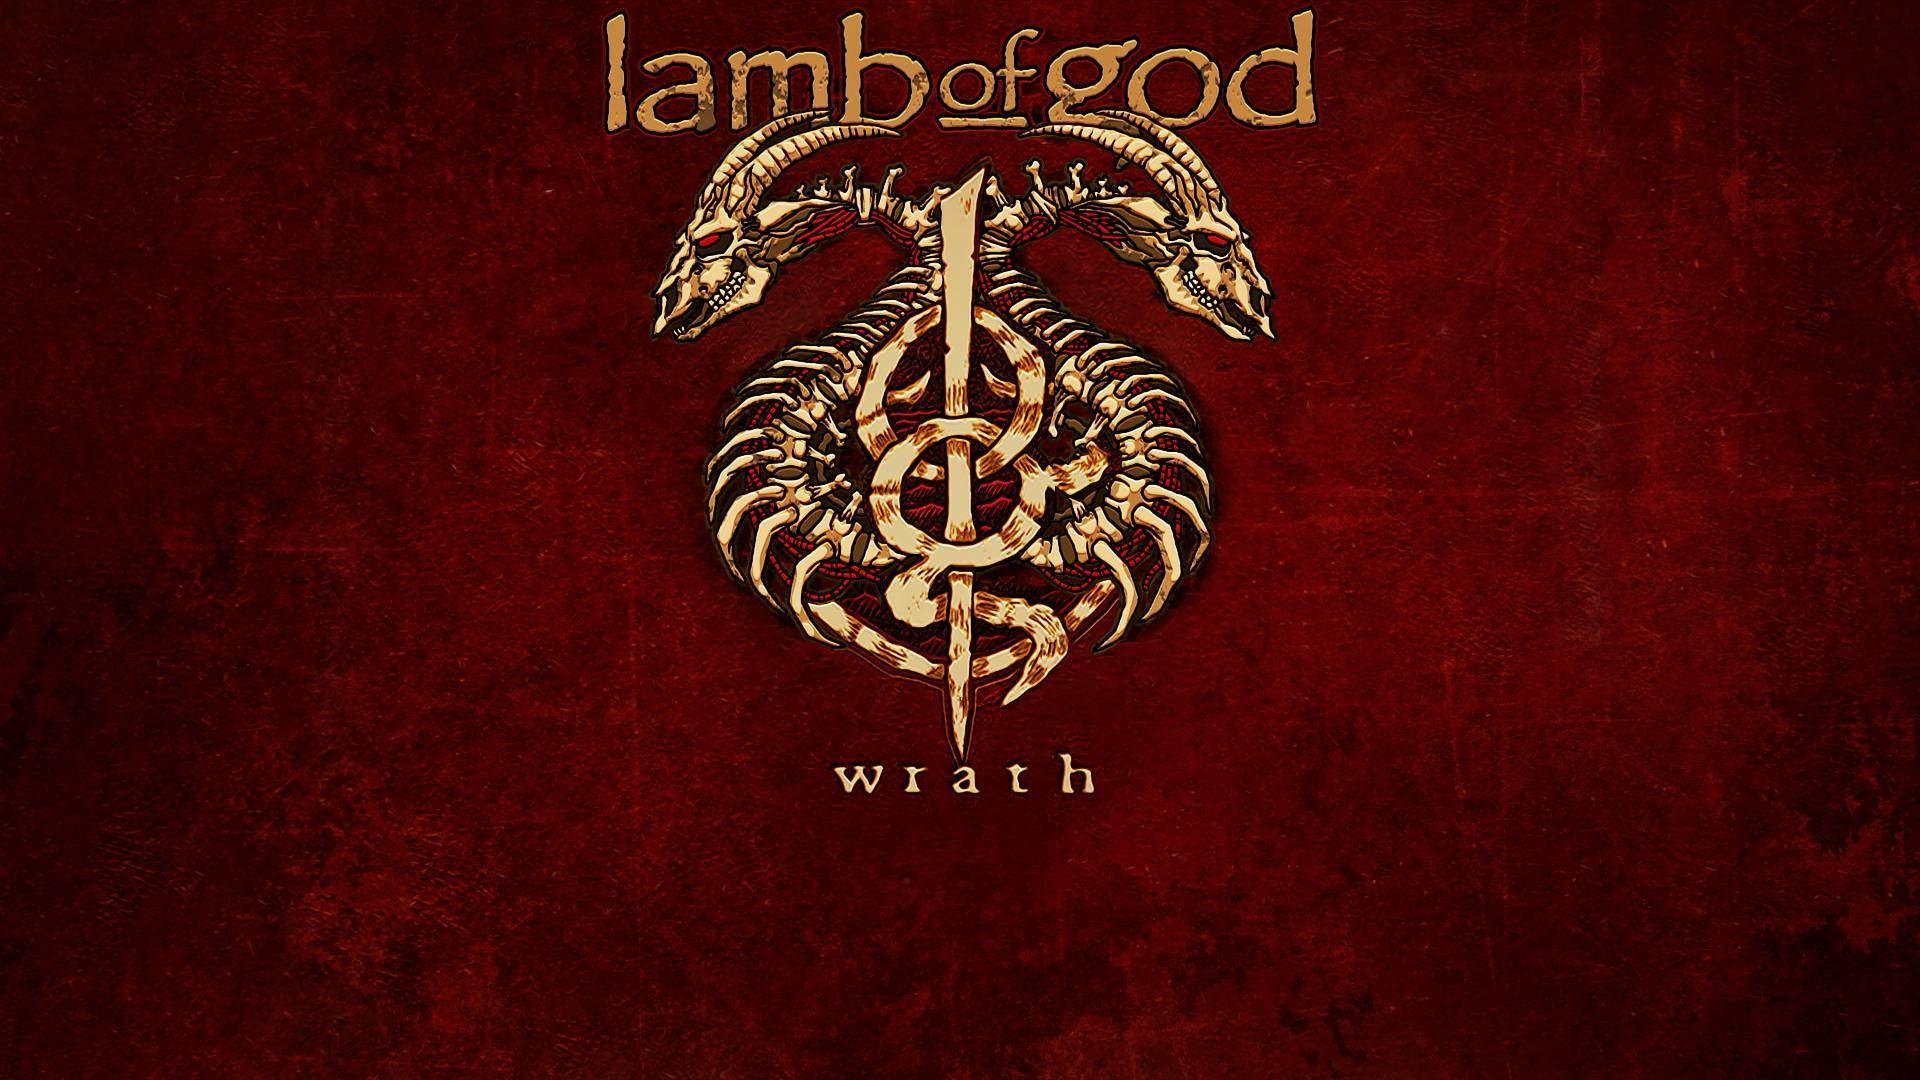 Lamb of God  BANDSWALLPAPERS  free wallpapers music wallpaper desktop  backrgounds